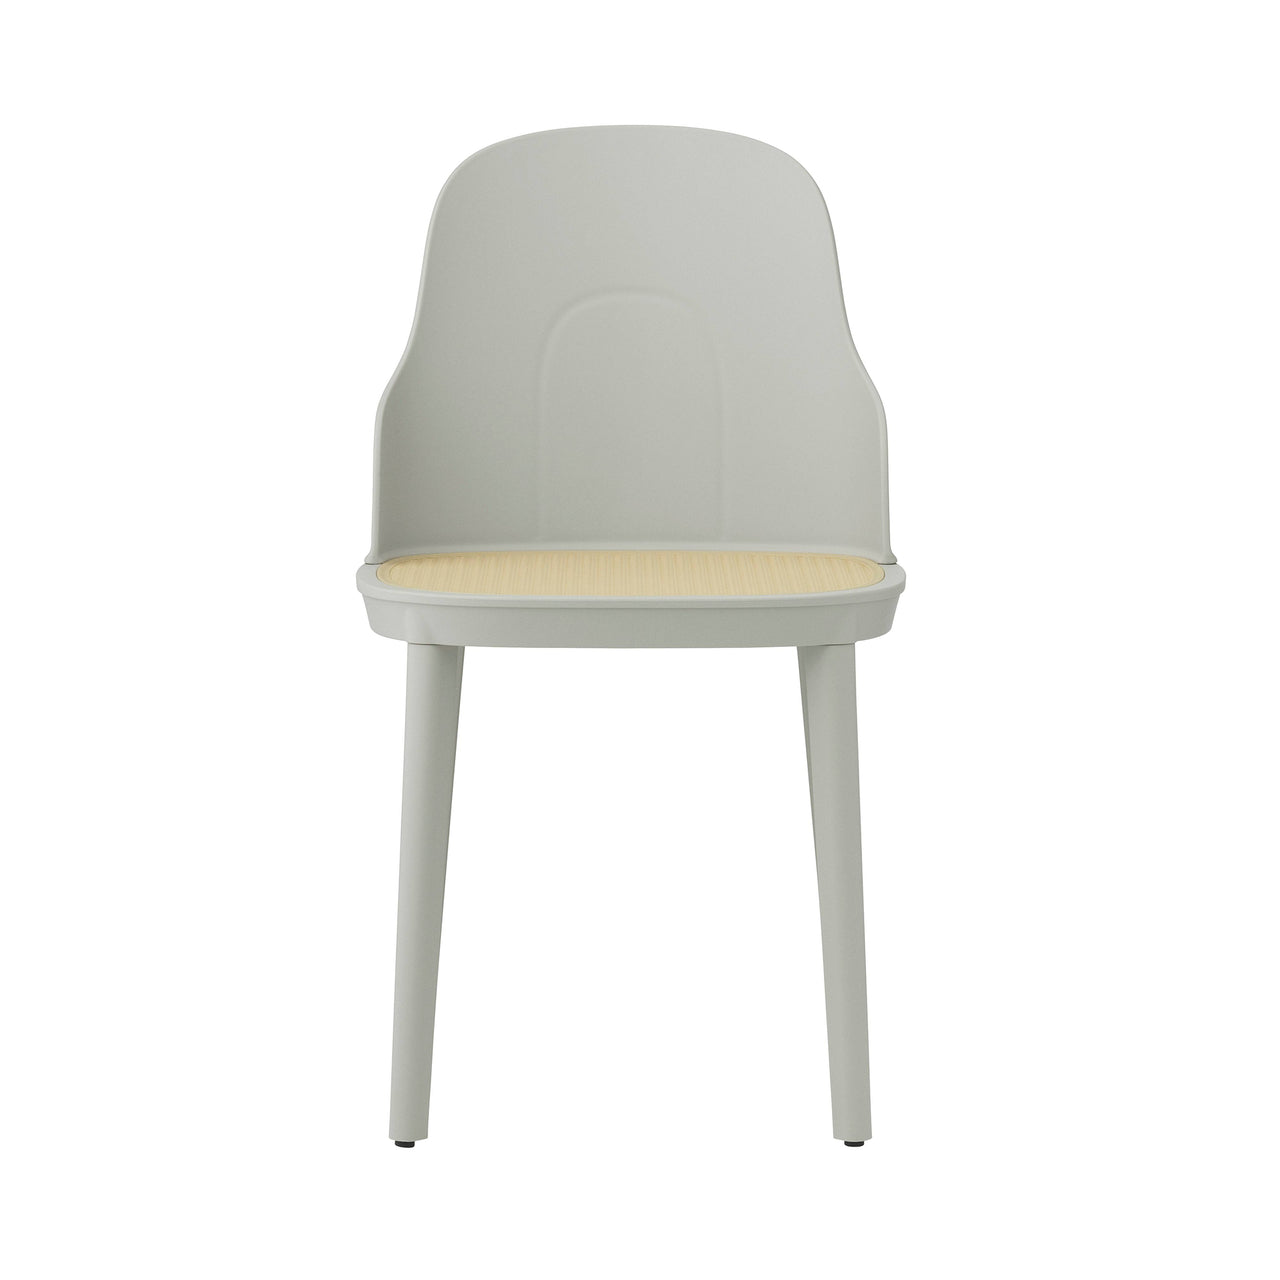 Allez Chair: Molded Wicker + Warm Grey + Polypropylene